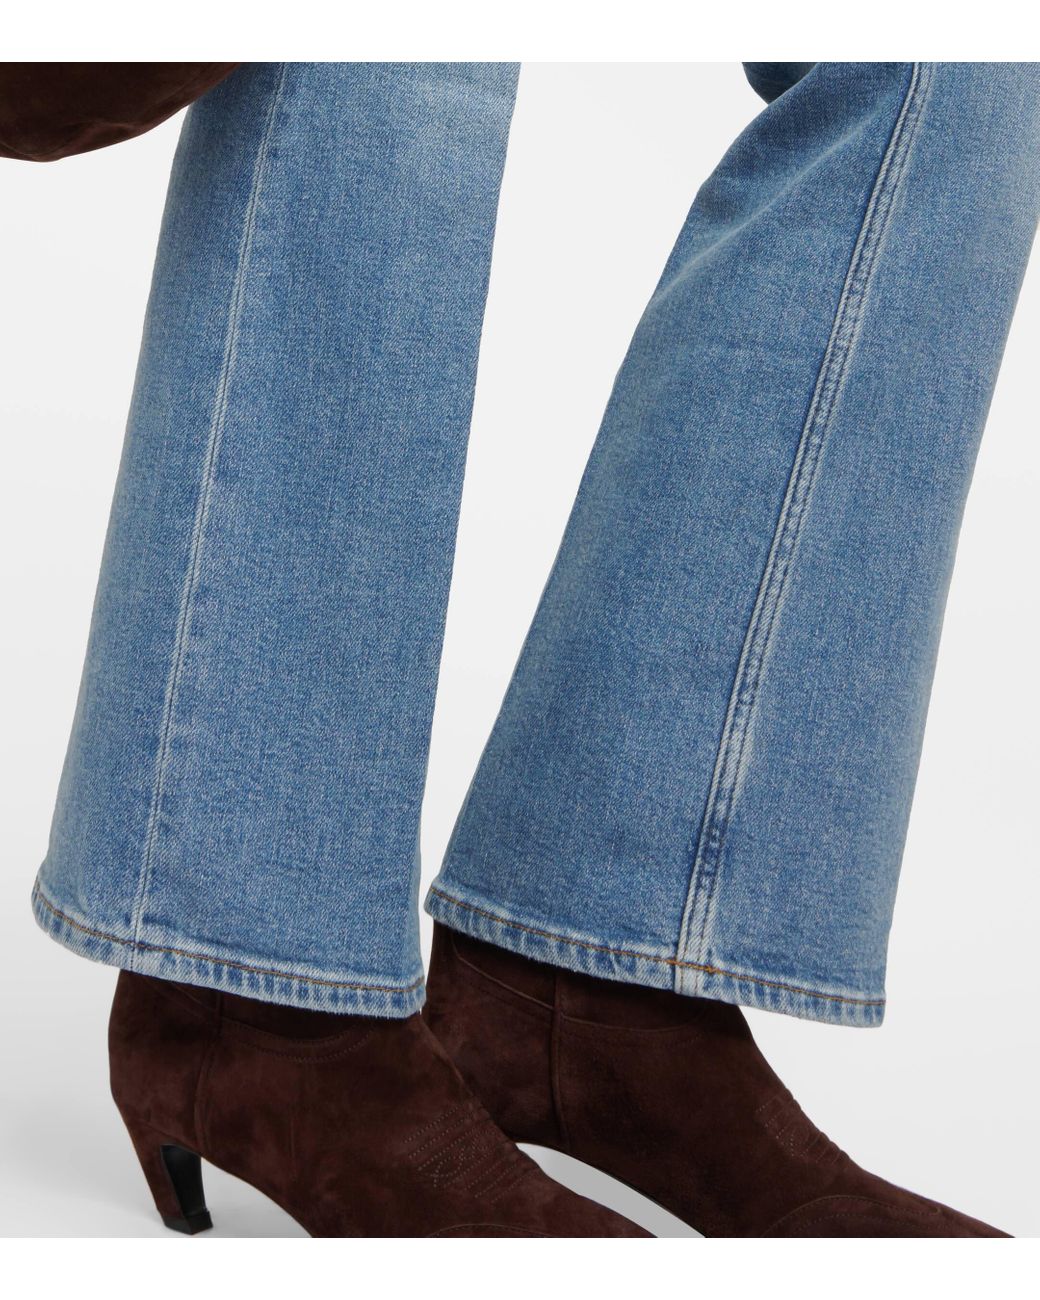 RE/DONE 70S HIGH RISE - Bootcut jeans - atomic/blue denim